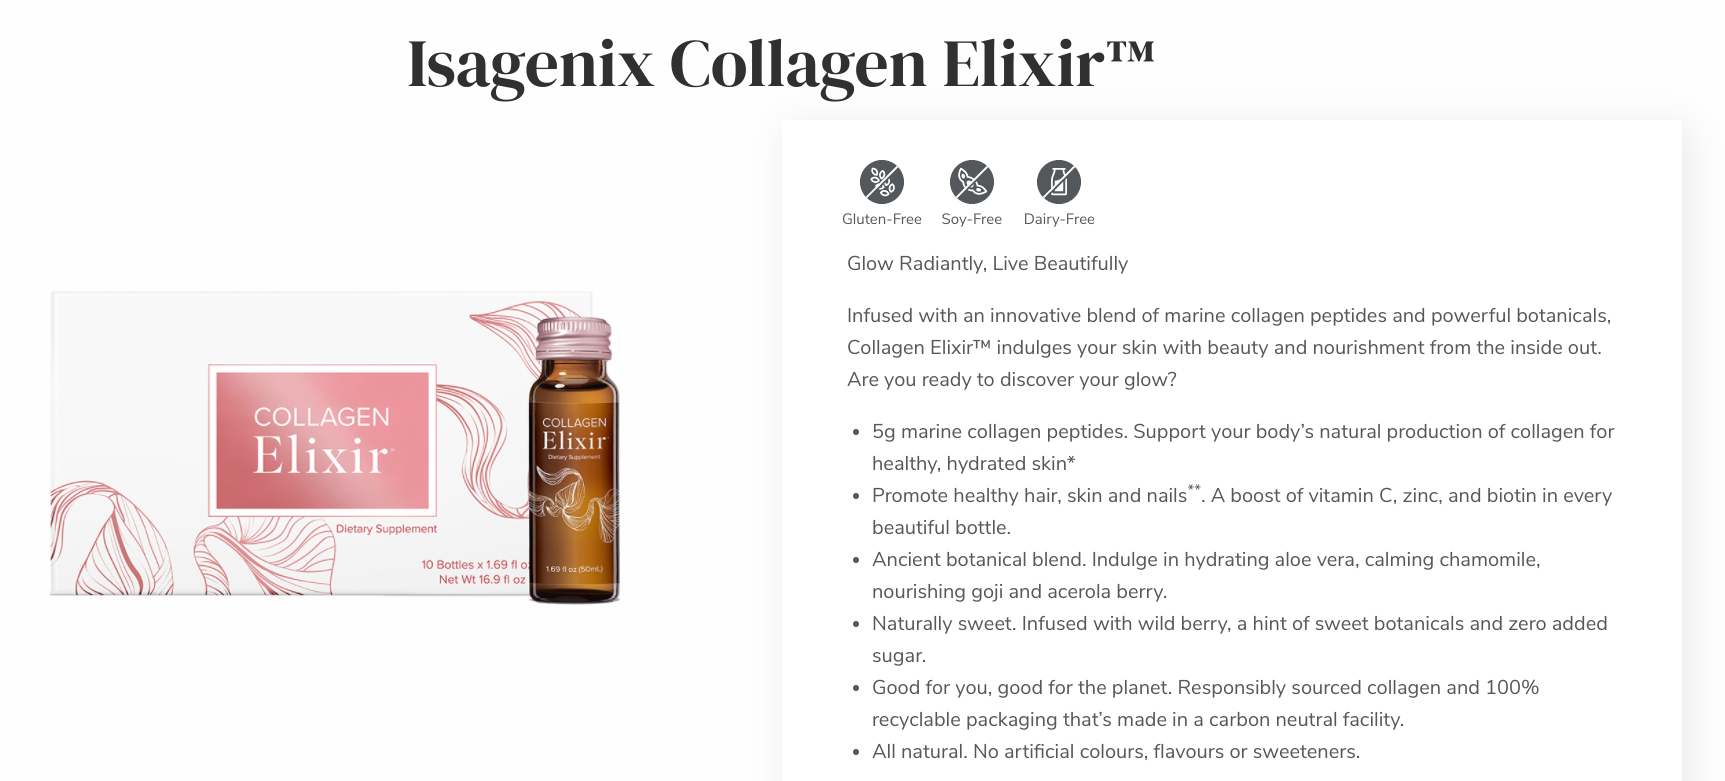 Isagenix Collagen Elixer Photo and Description